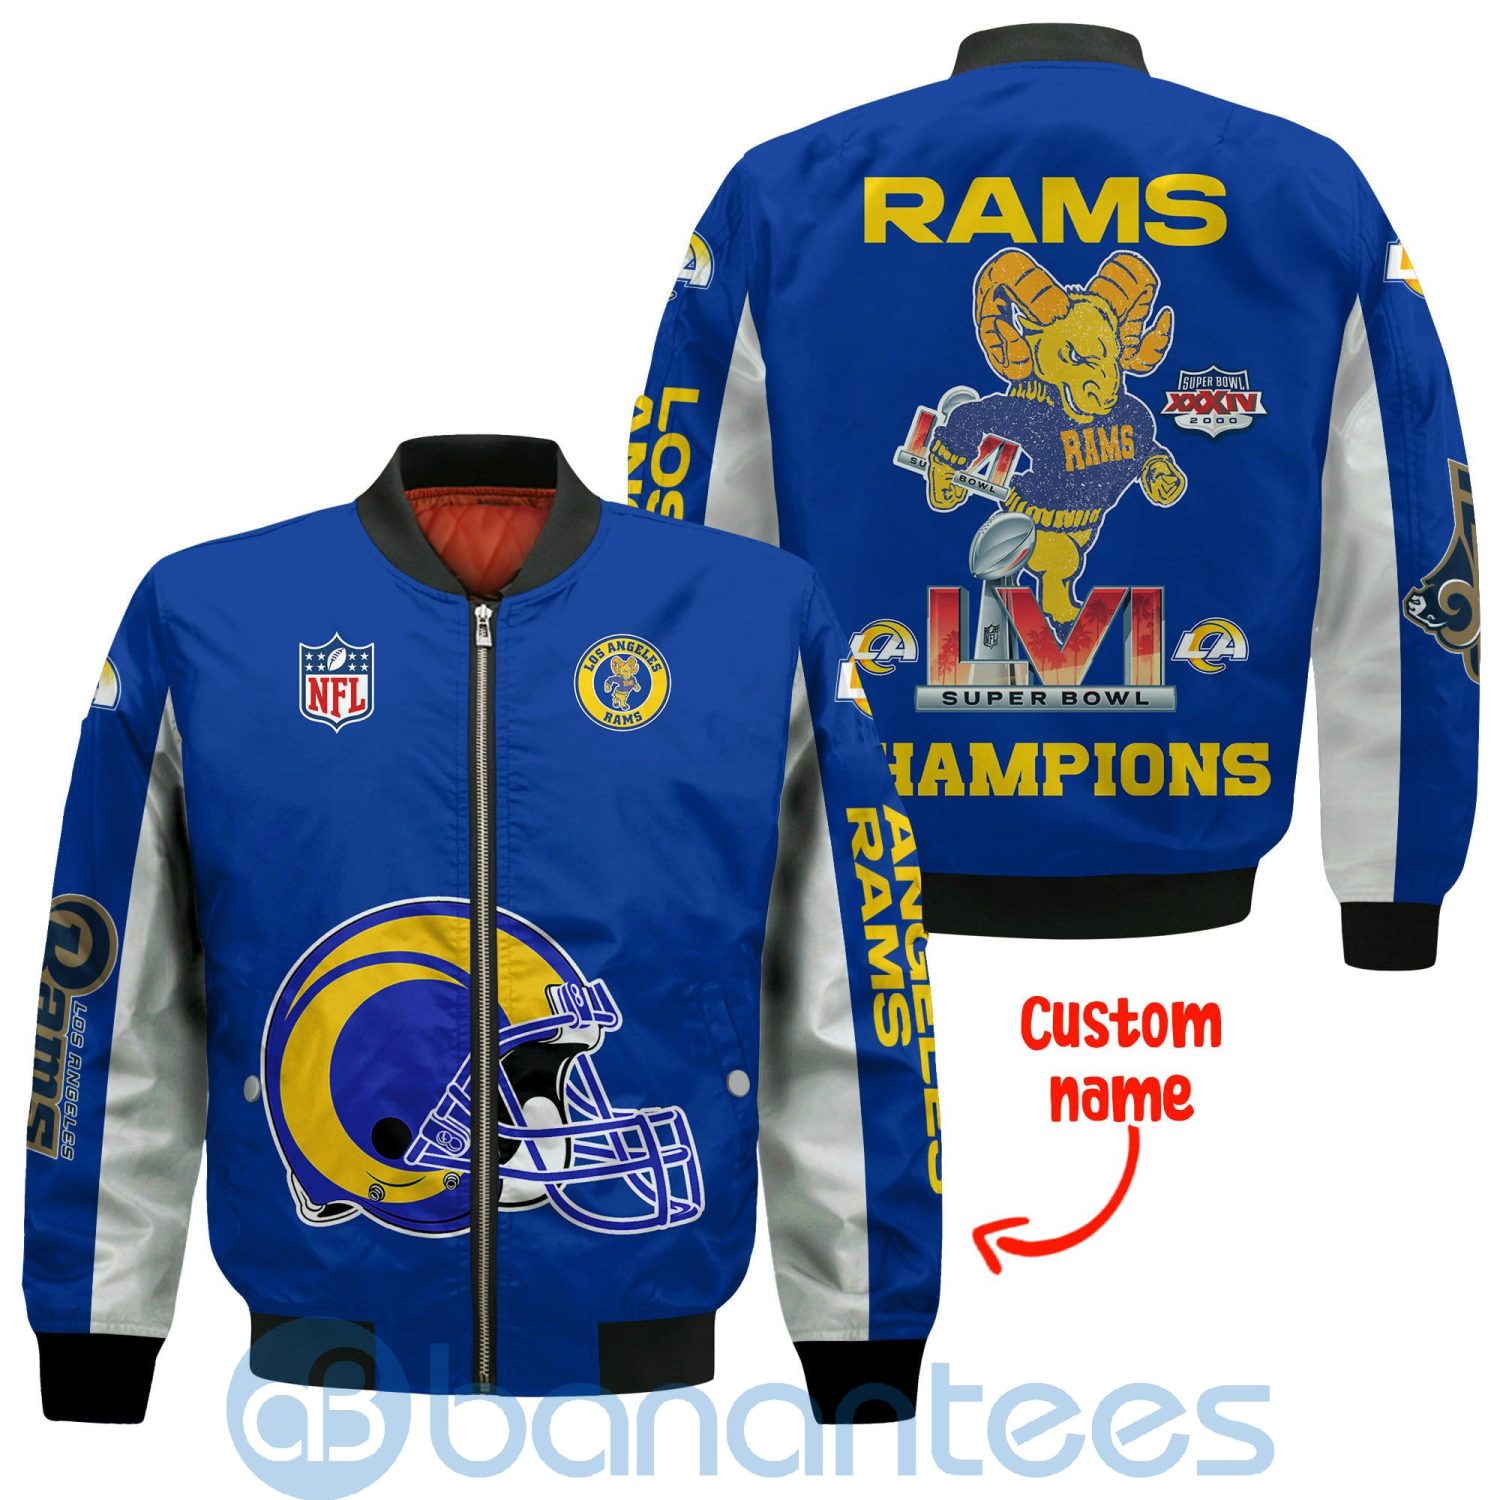 Los Angeles Rams Vintage Mascot Super Bowl LVI Champions 2021 Custom Name Bomber Jacket